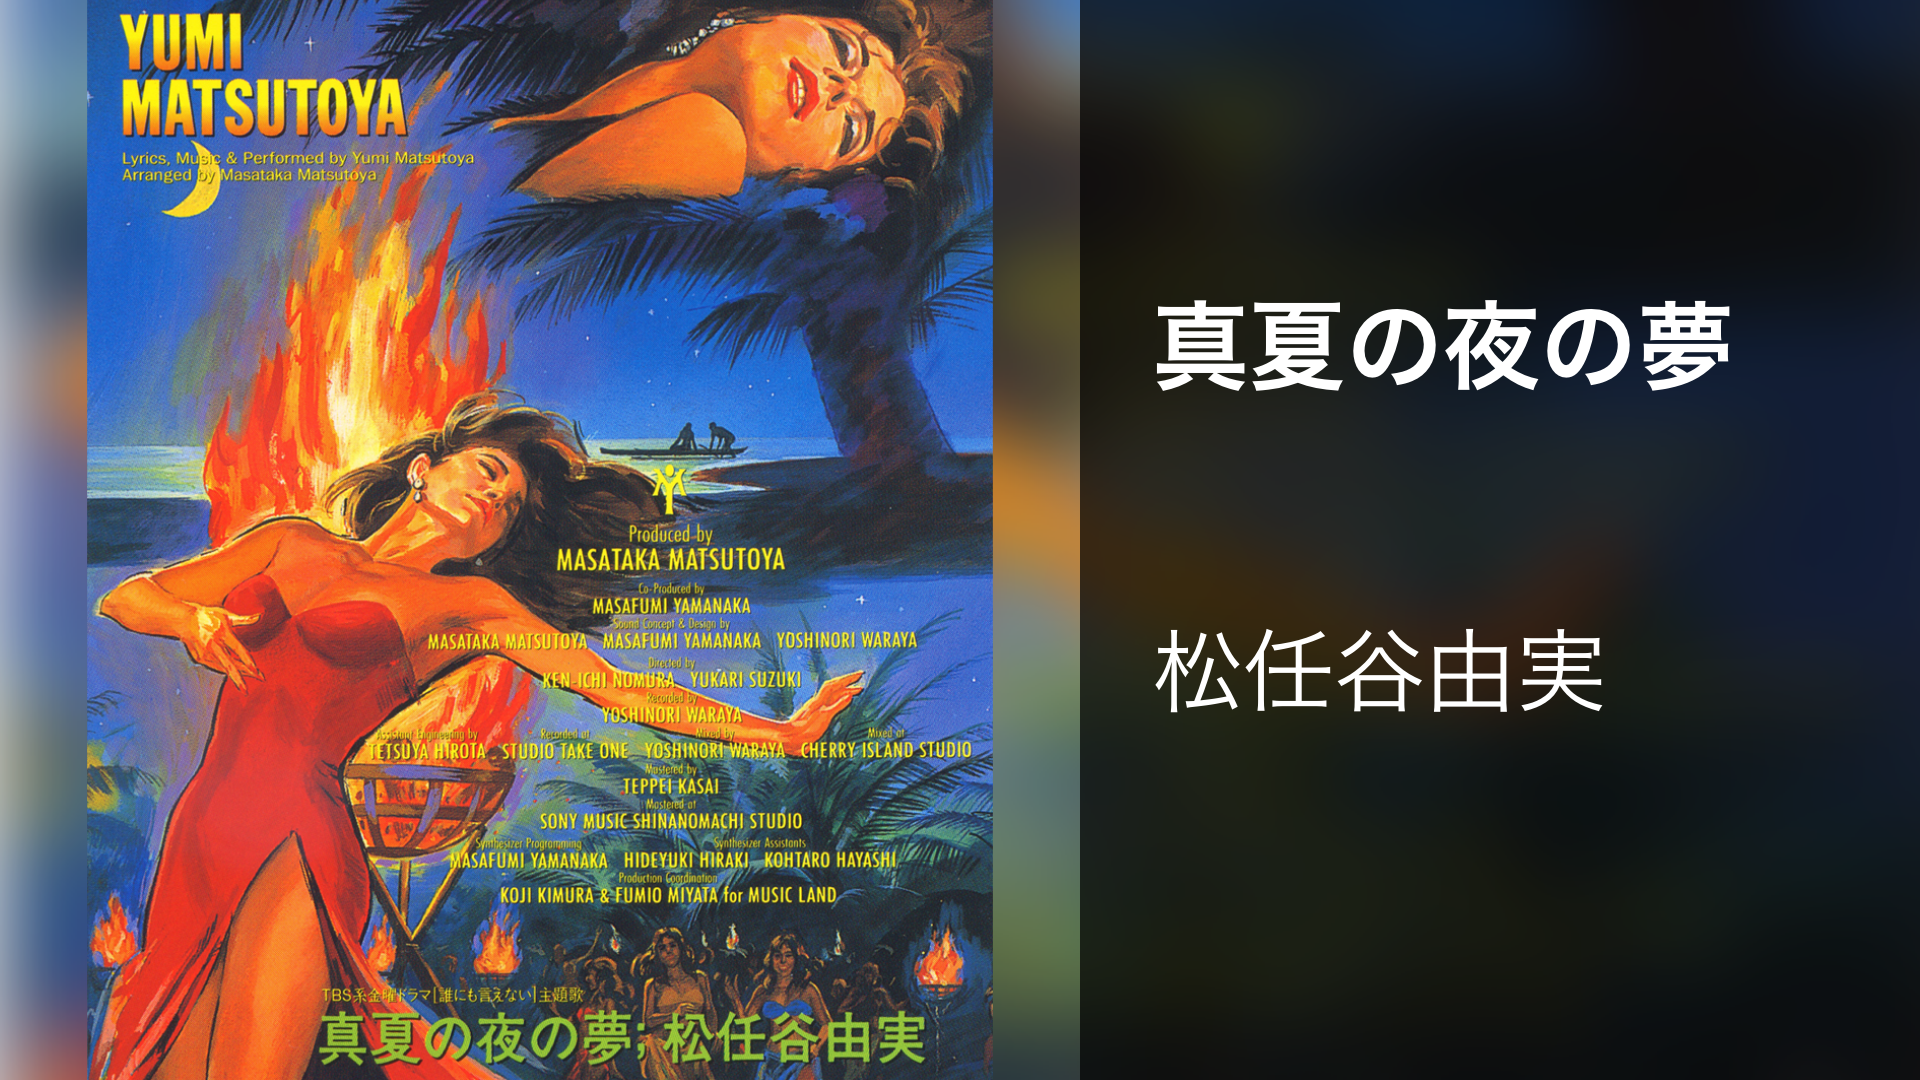 真夏の夜の夢(音楽・ライブ / 1993) - 動画配信 | U-NEXT 31日間無料